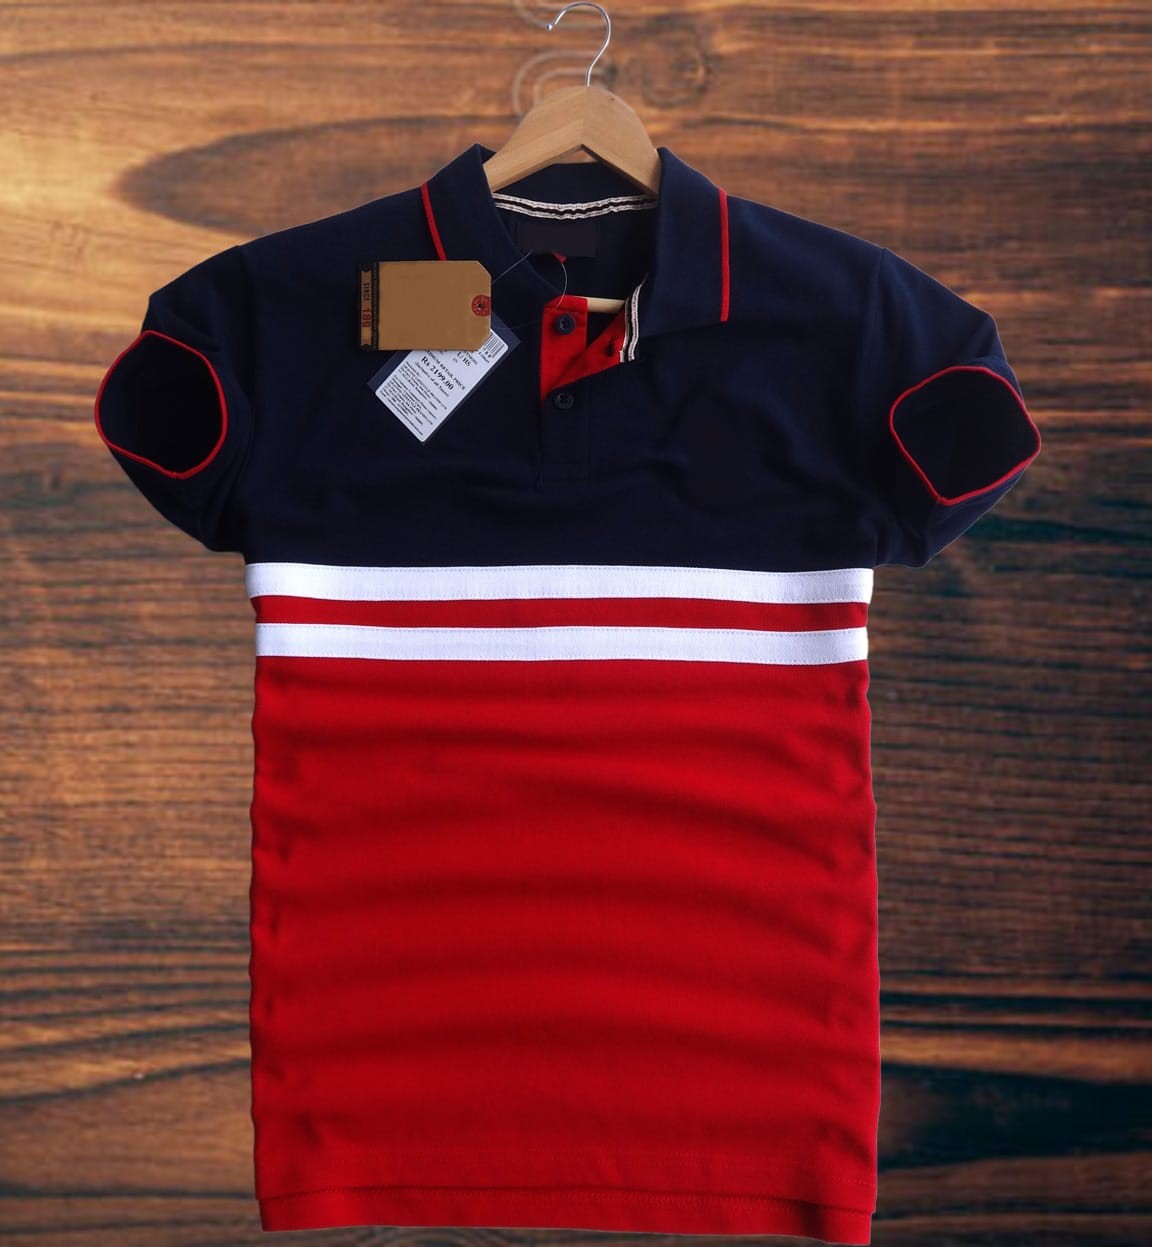 Men stylish T Shirt Red Navy Blue with white stripe